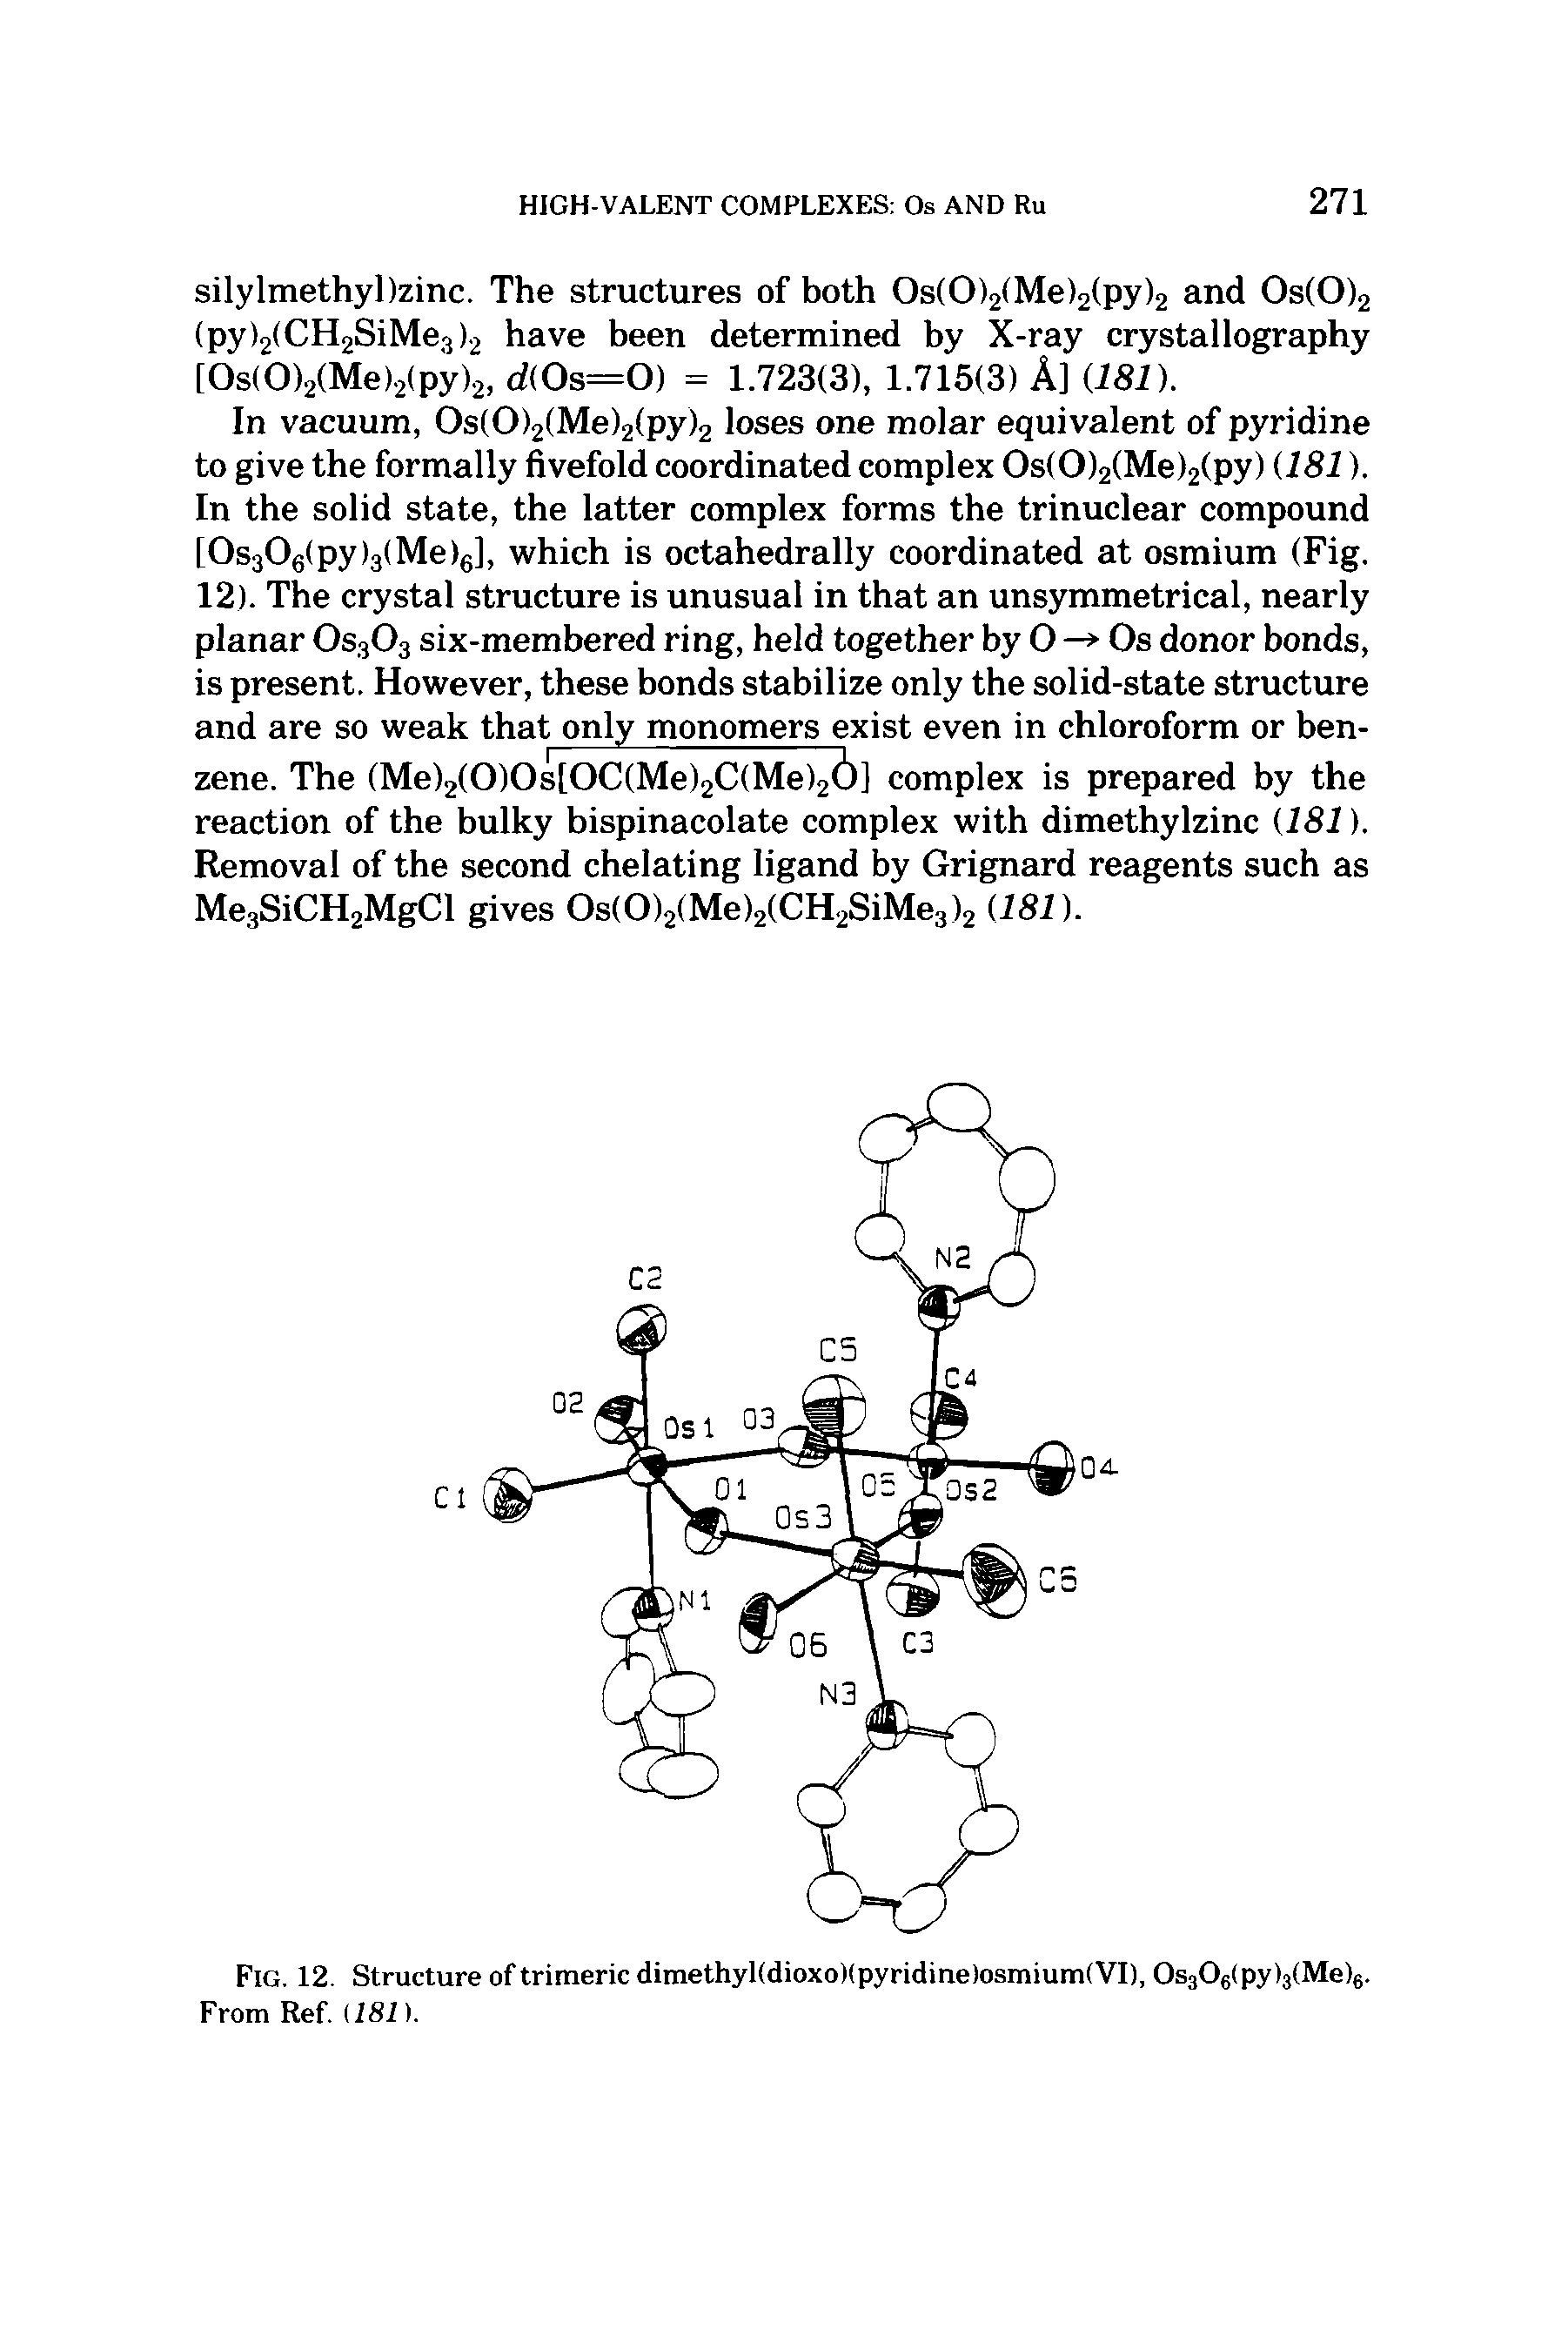 Fig. 12. Structure of trimeric dimethyl(dioxo)(pyridme)osmium(VI), 0s306(py)3(Me)6. From Ref. U81).